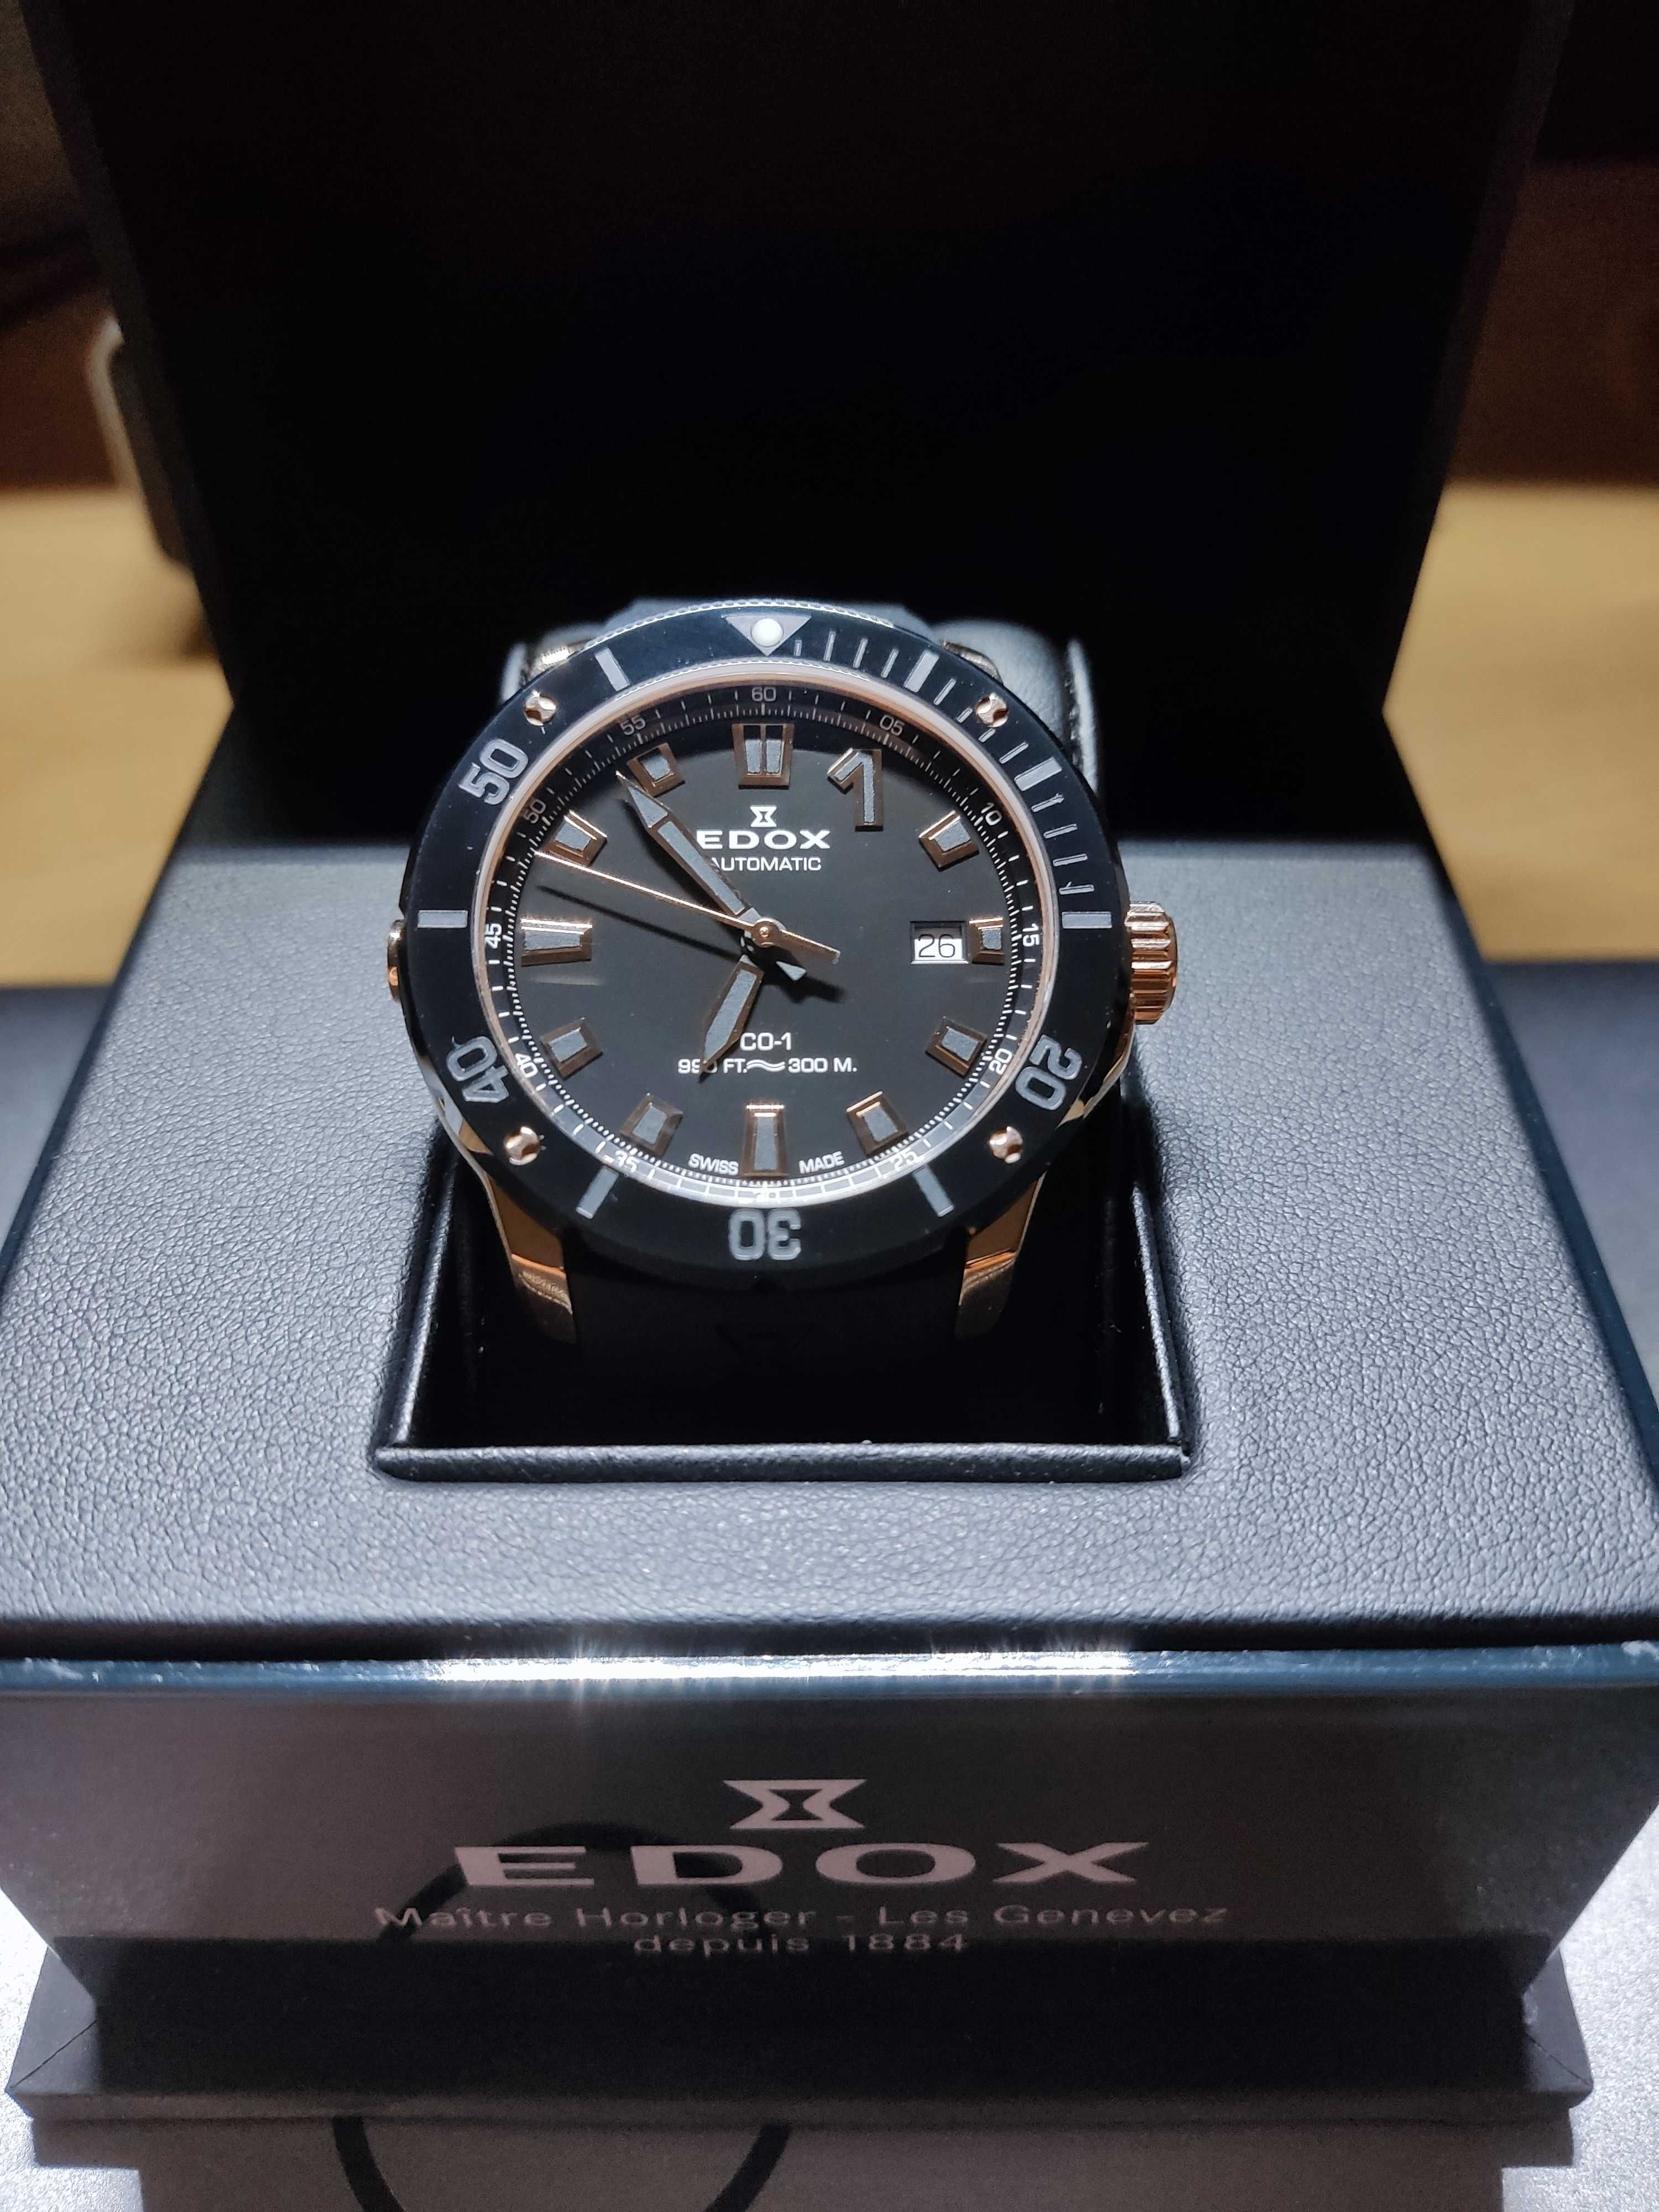 Zegarek EDOX CO-1 300m diver swiss made jak Doxa Tag Tissot nowy